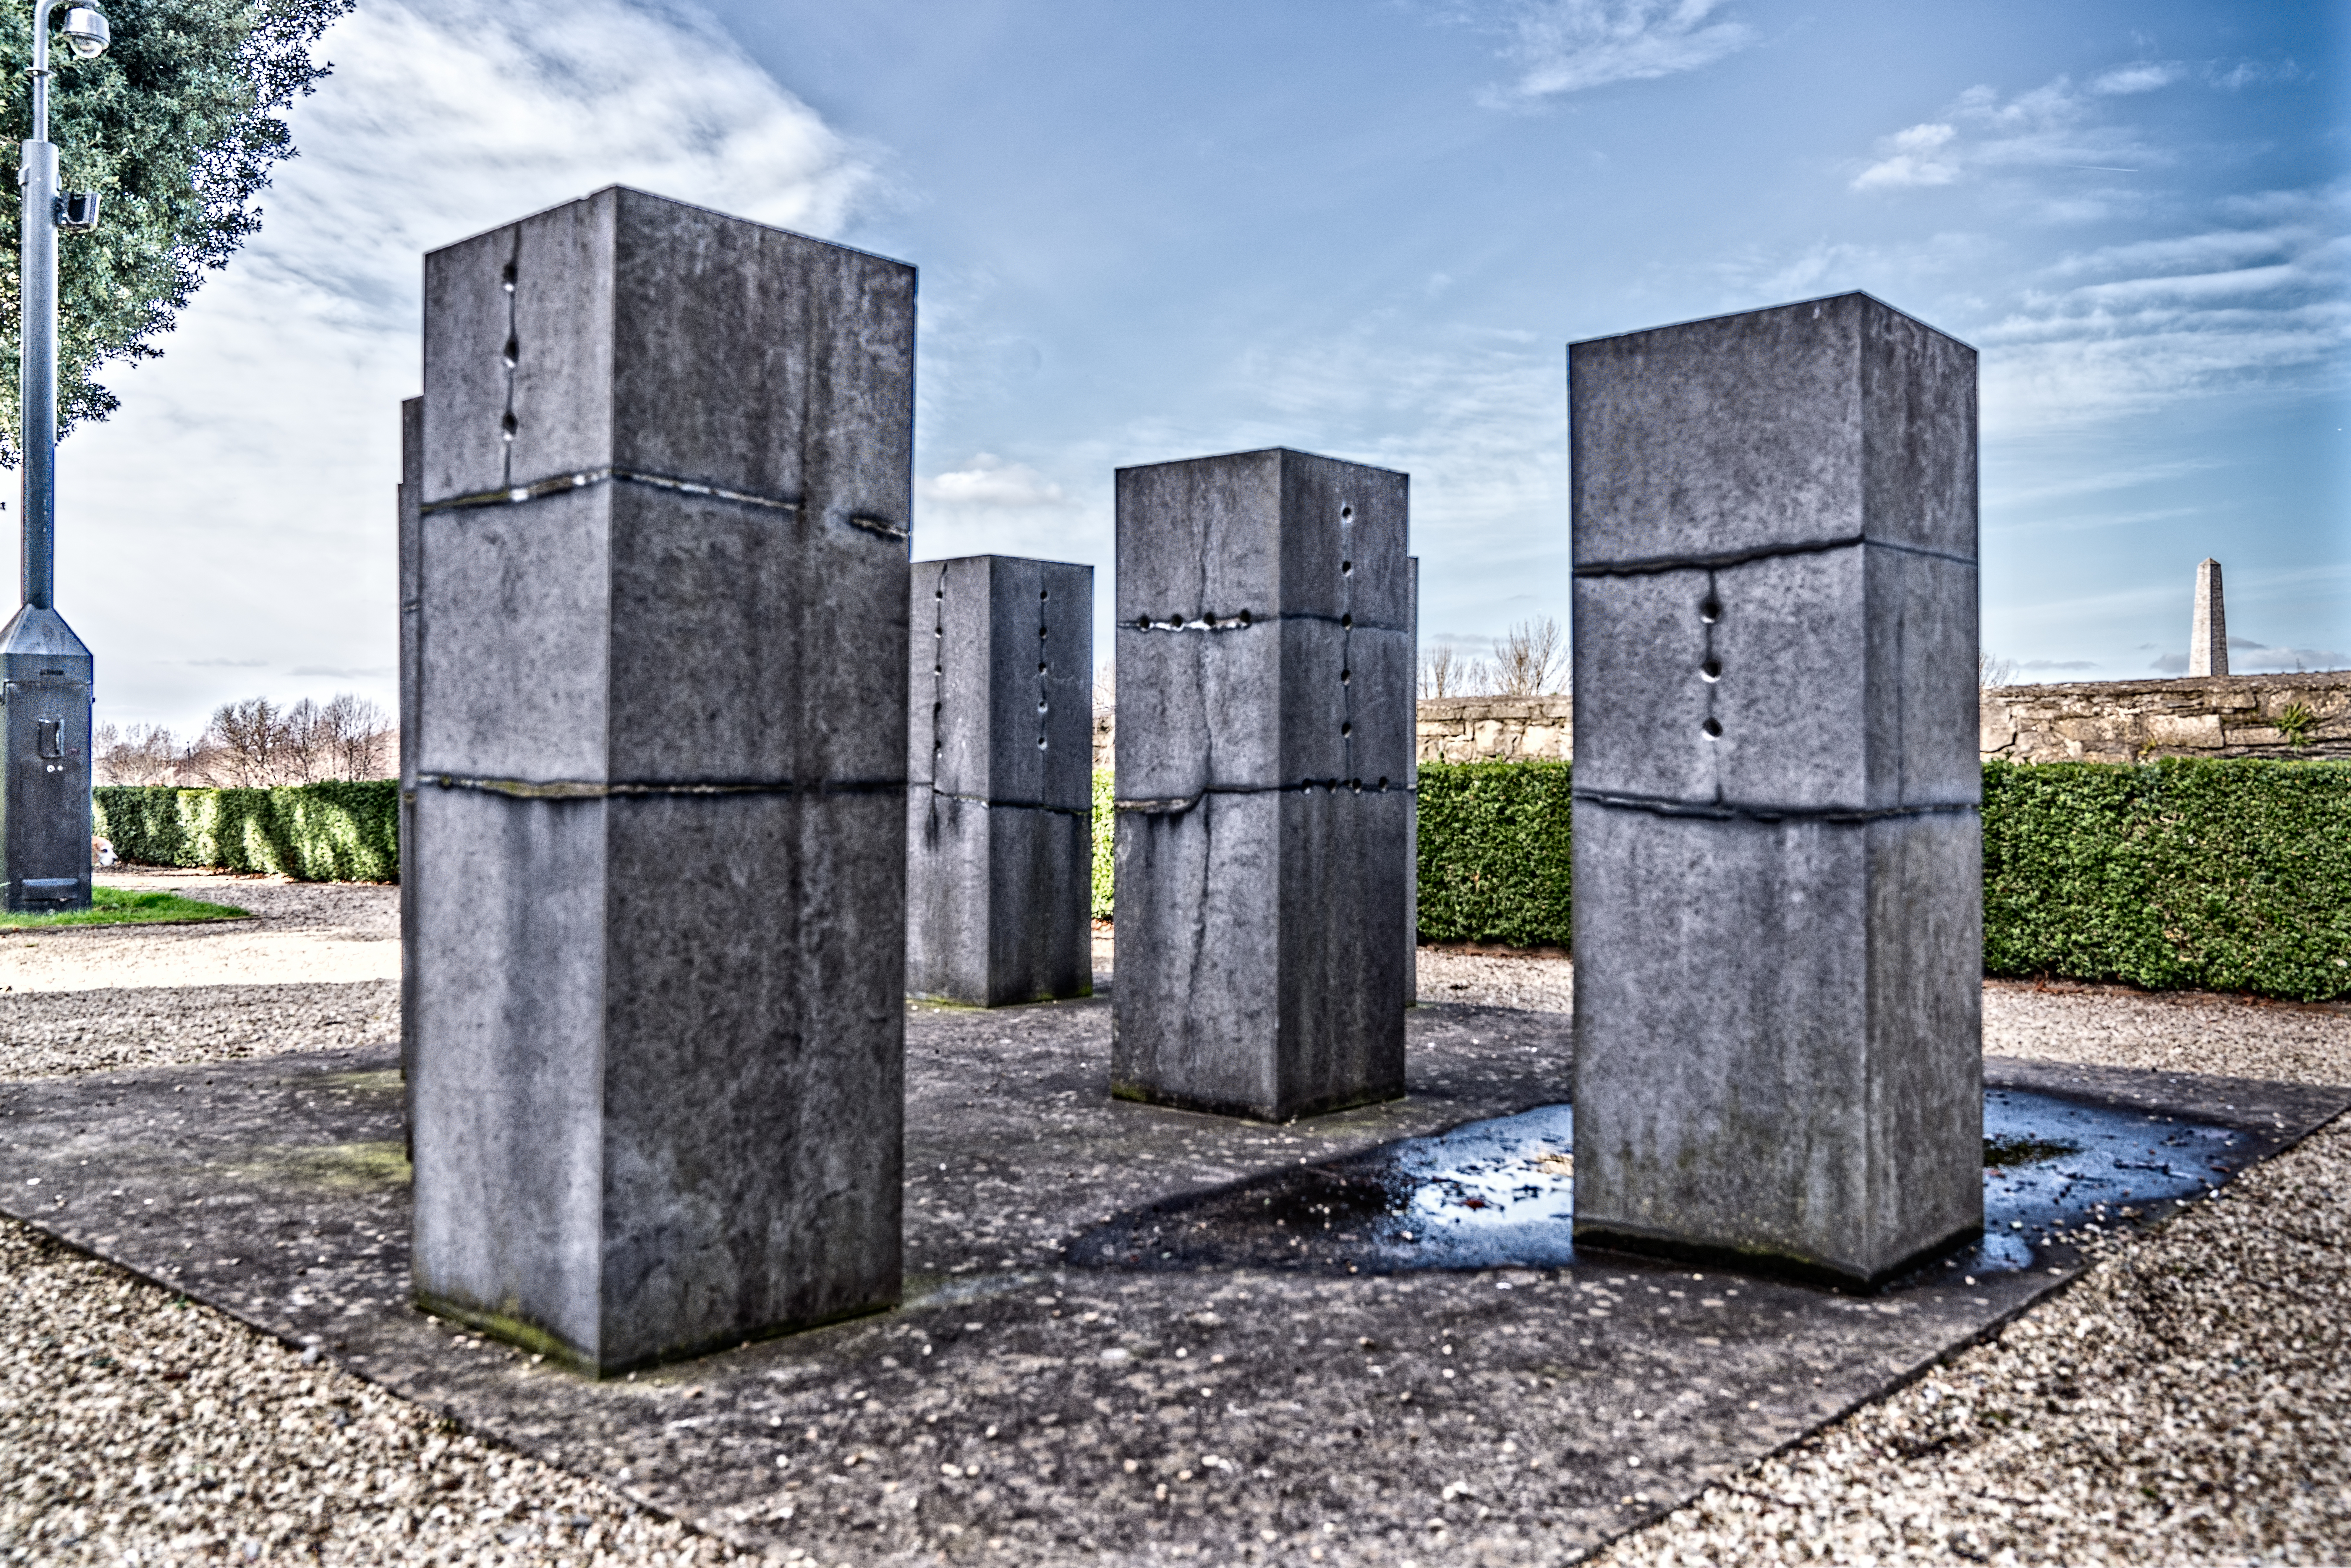  “8 Limestones” by Ulrich Rückriem 